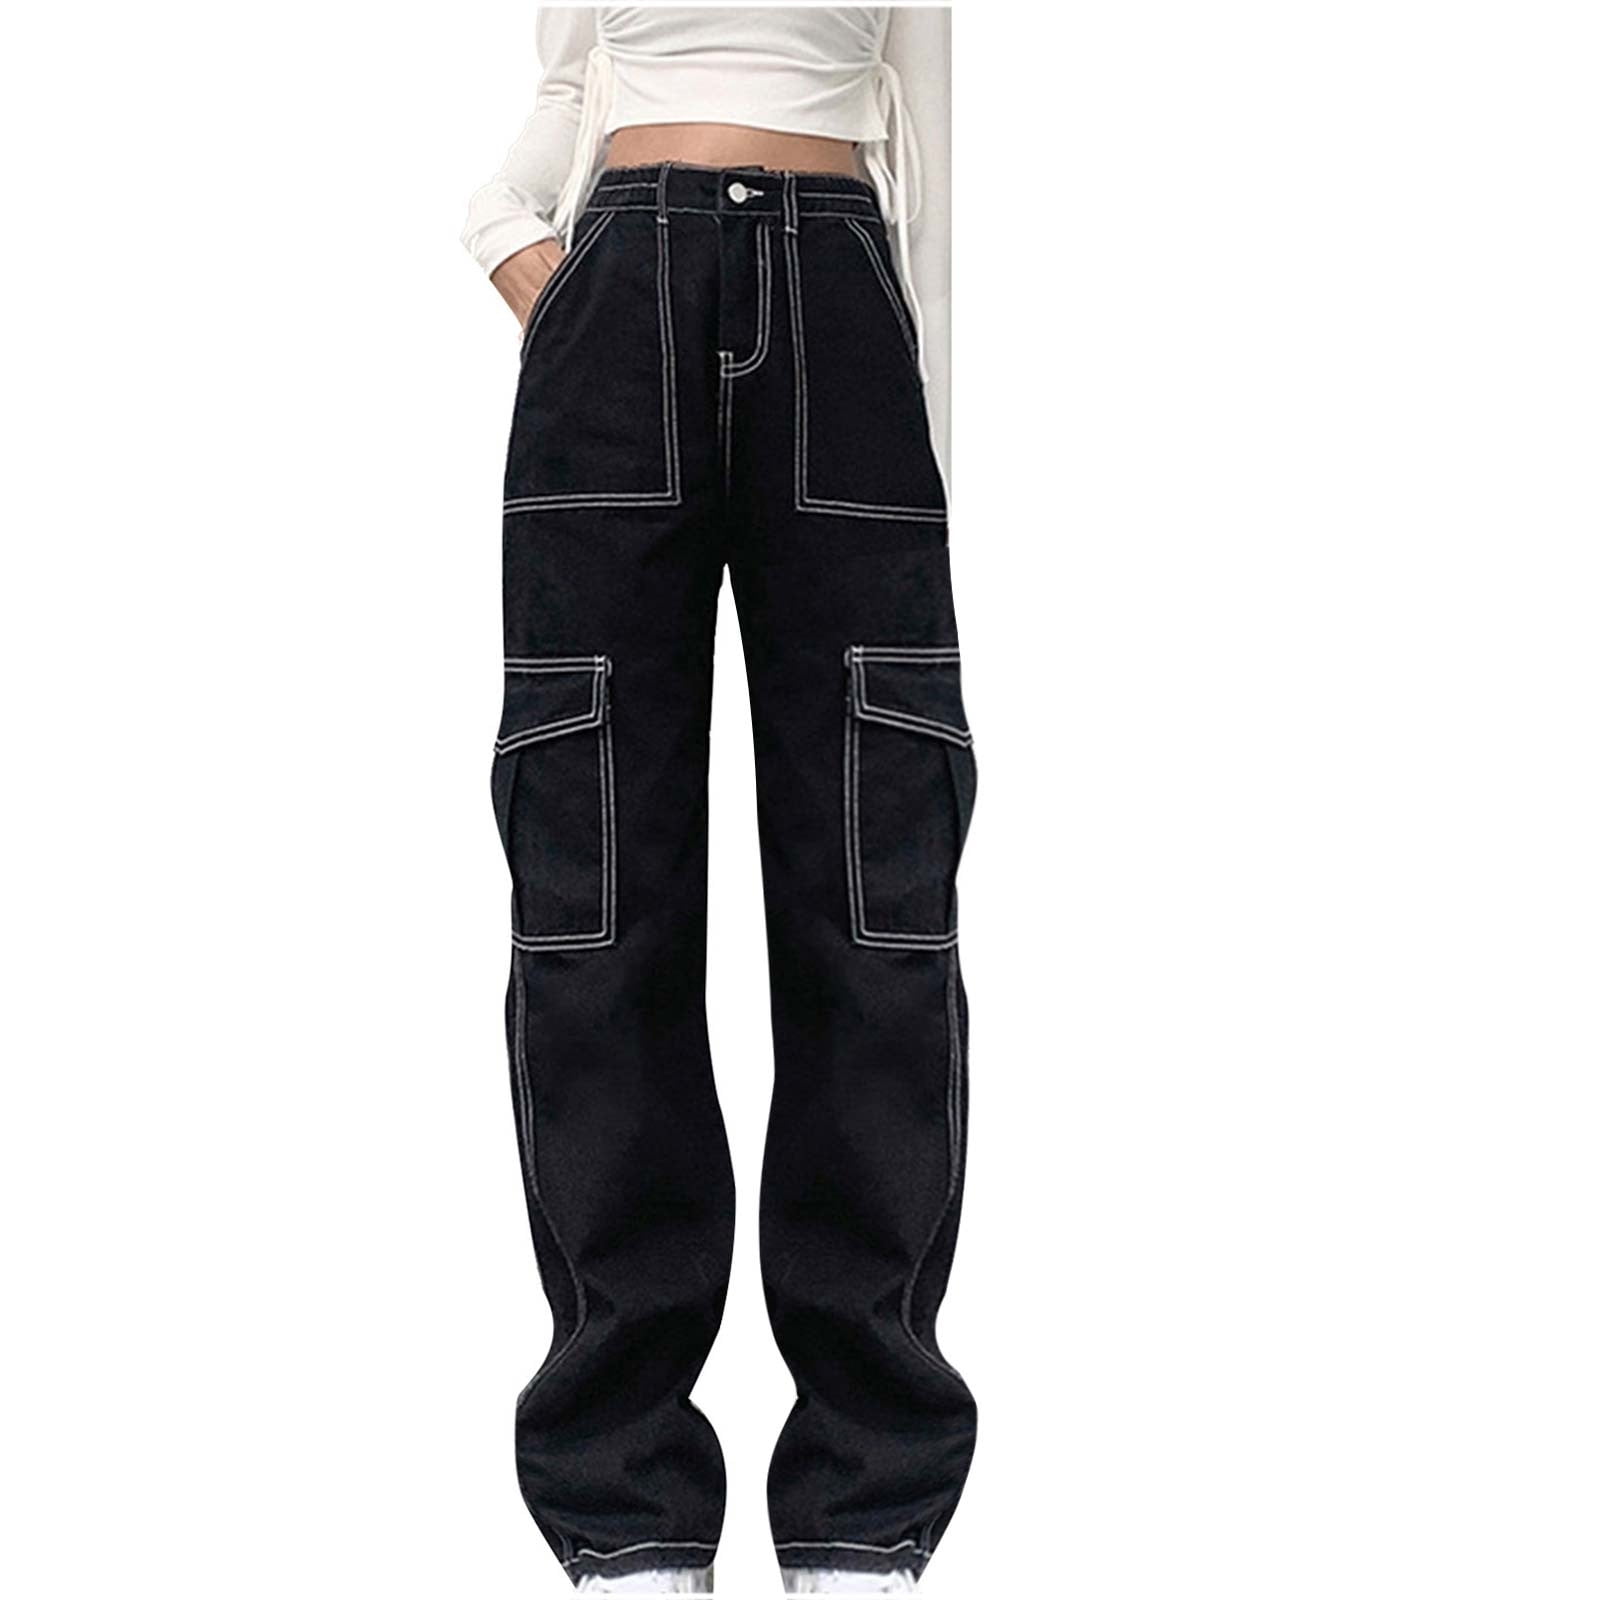 SMihono Clearance Cargo Pants Women's Denim With Semi Elastic